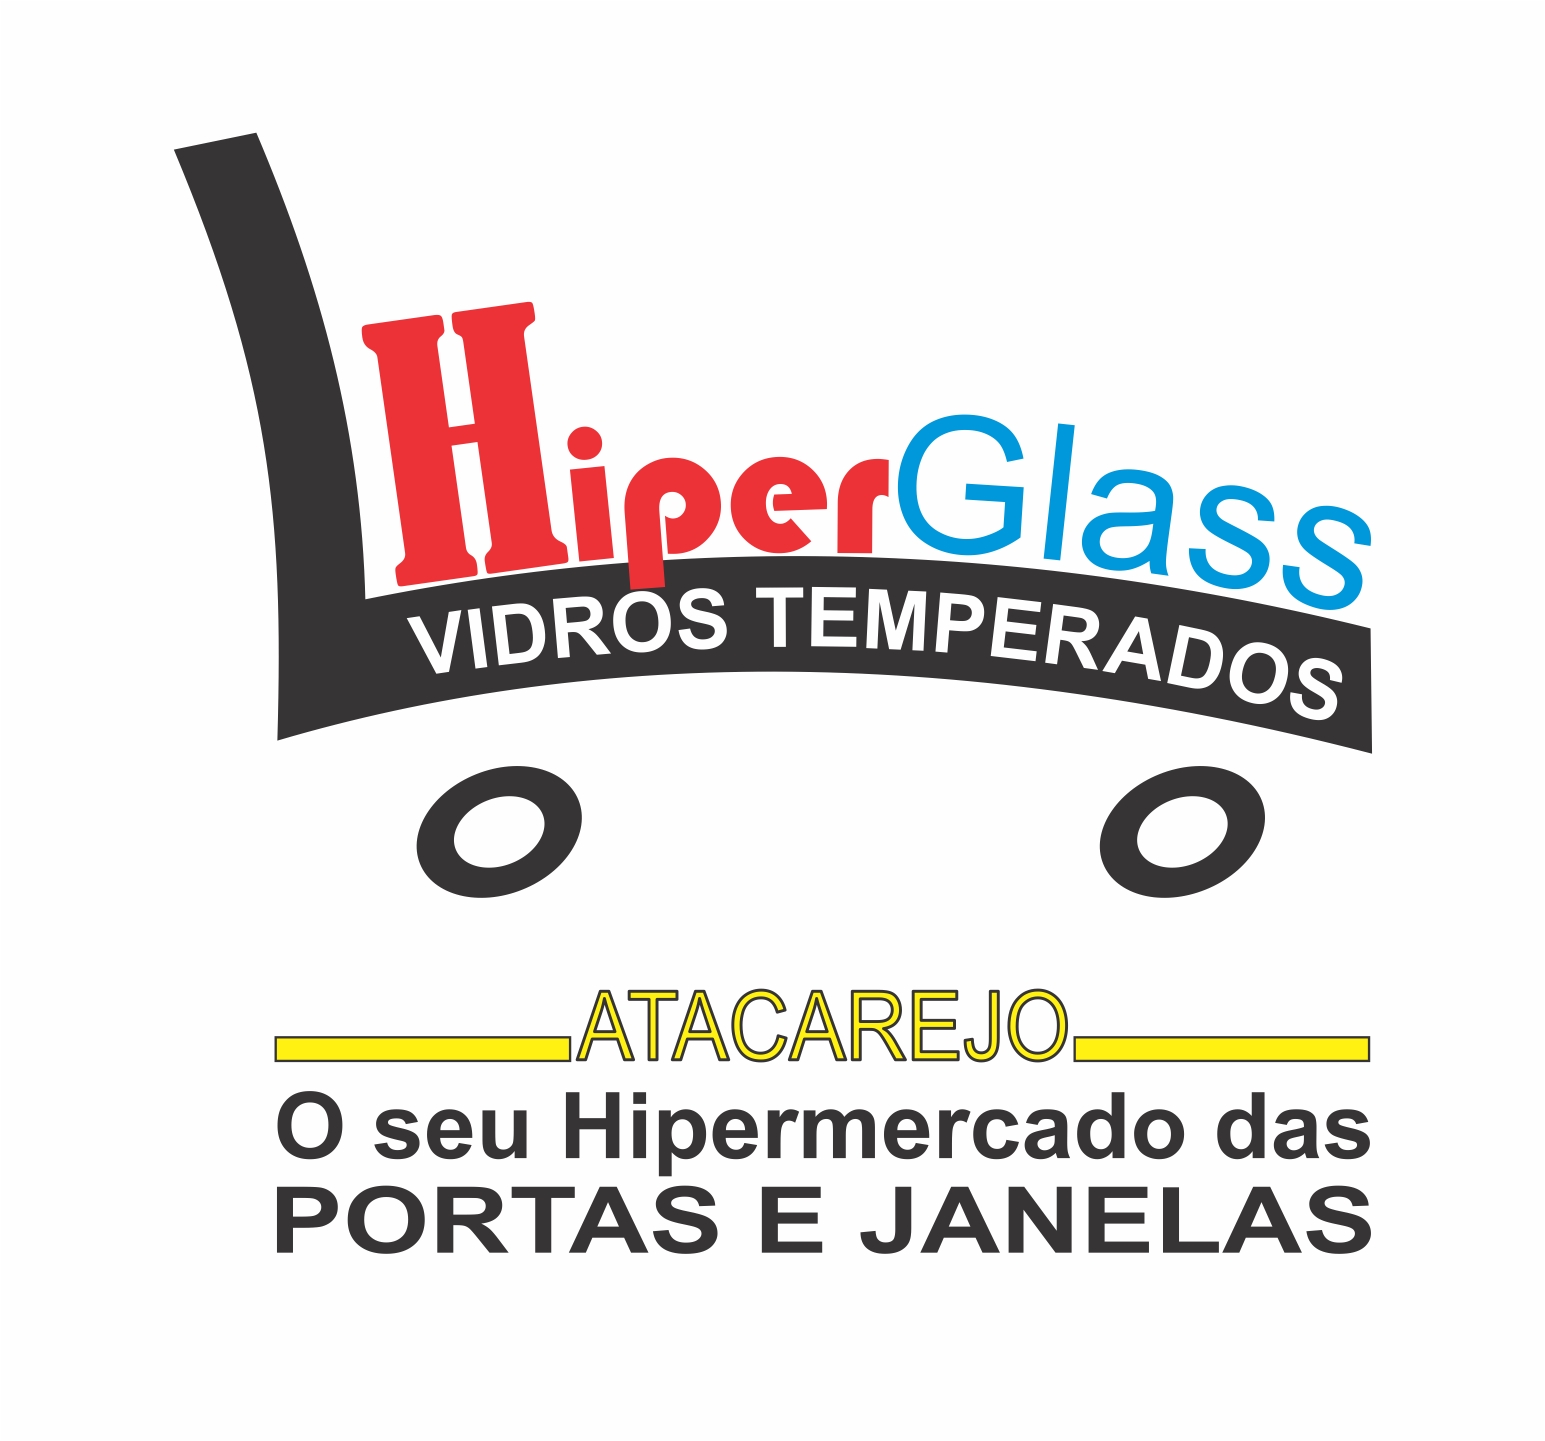 HiperGlass